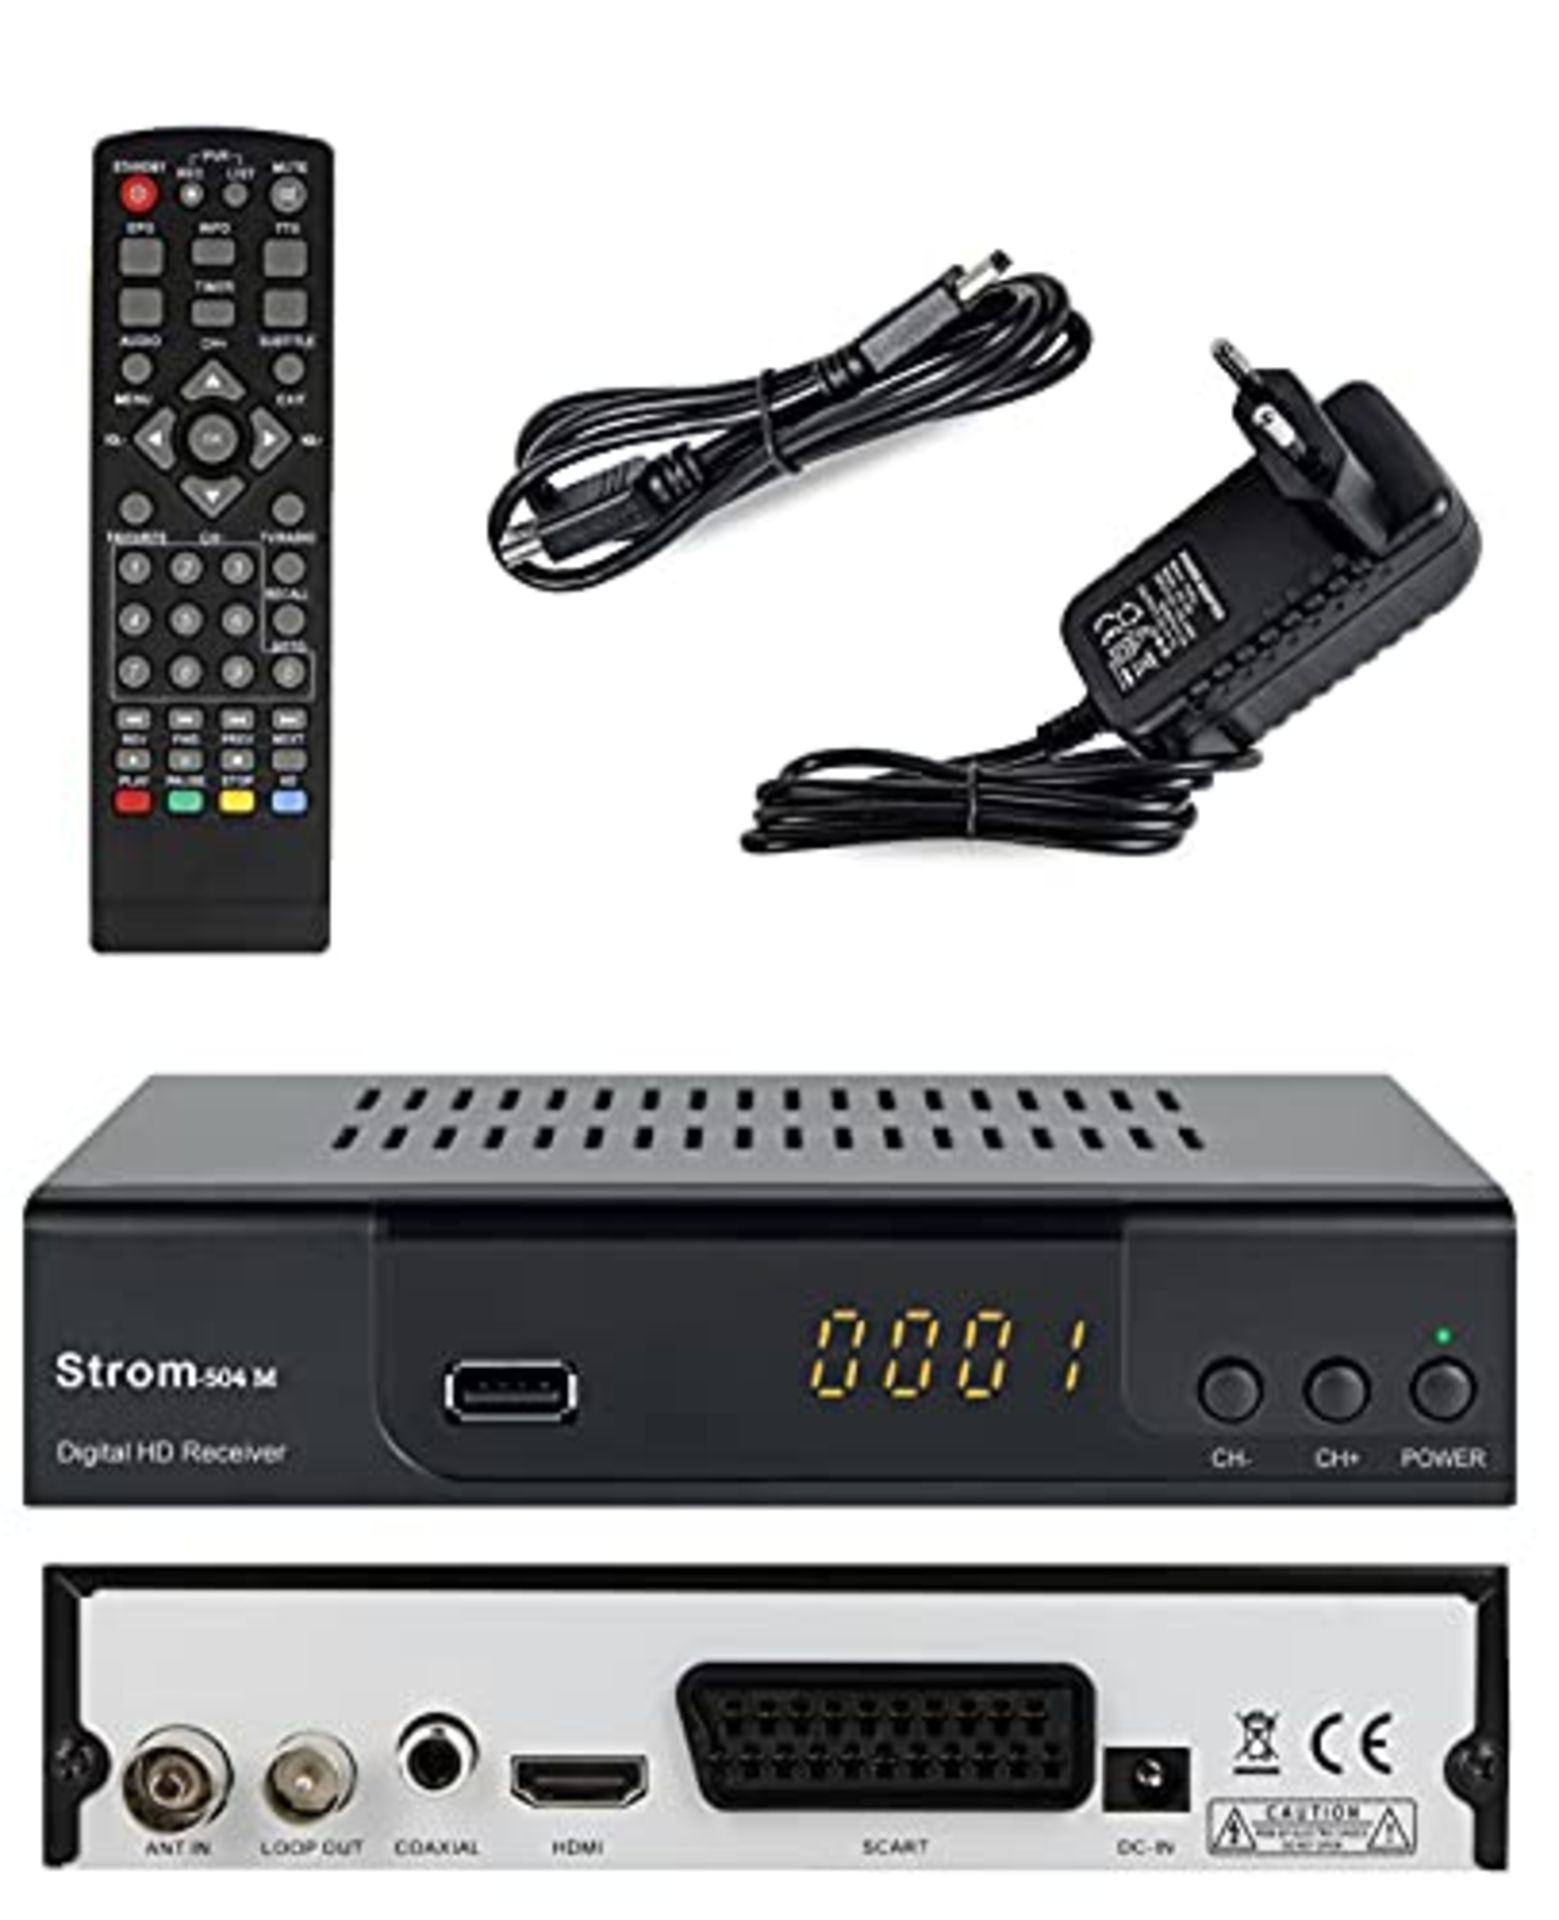 STROM 504 - Decoder TNT Full HD DVB-T2, compatibile con HEVC264 (HDMI, Scart, USB, Dig